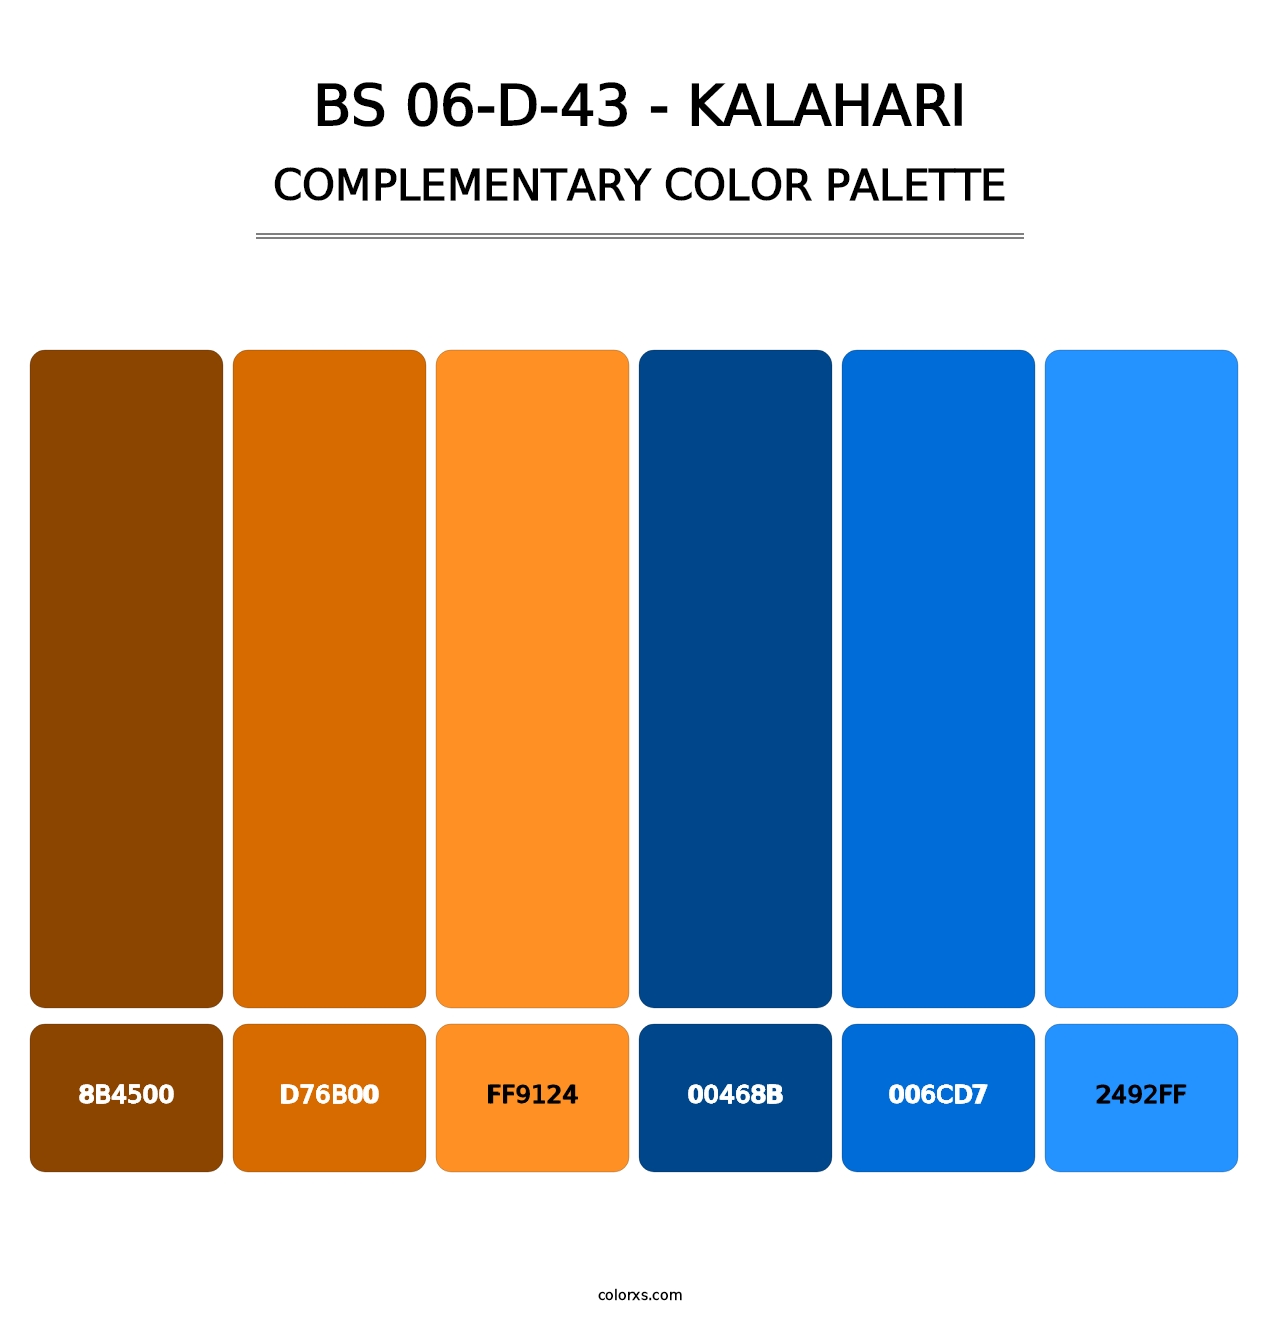 BS 06-D-43 - Kalahari - Complementary Color Palette